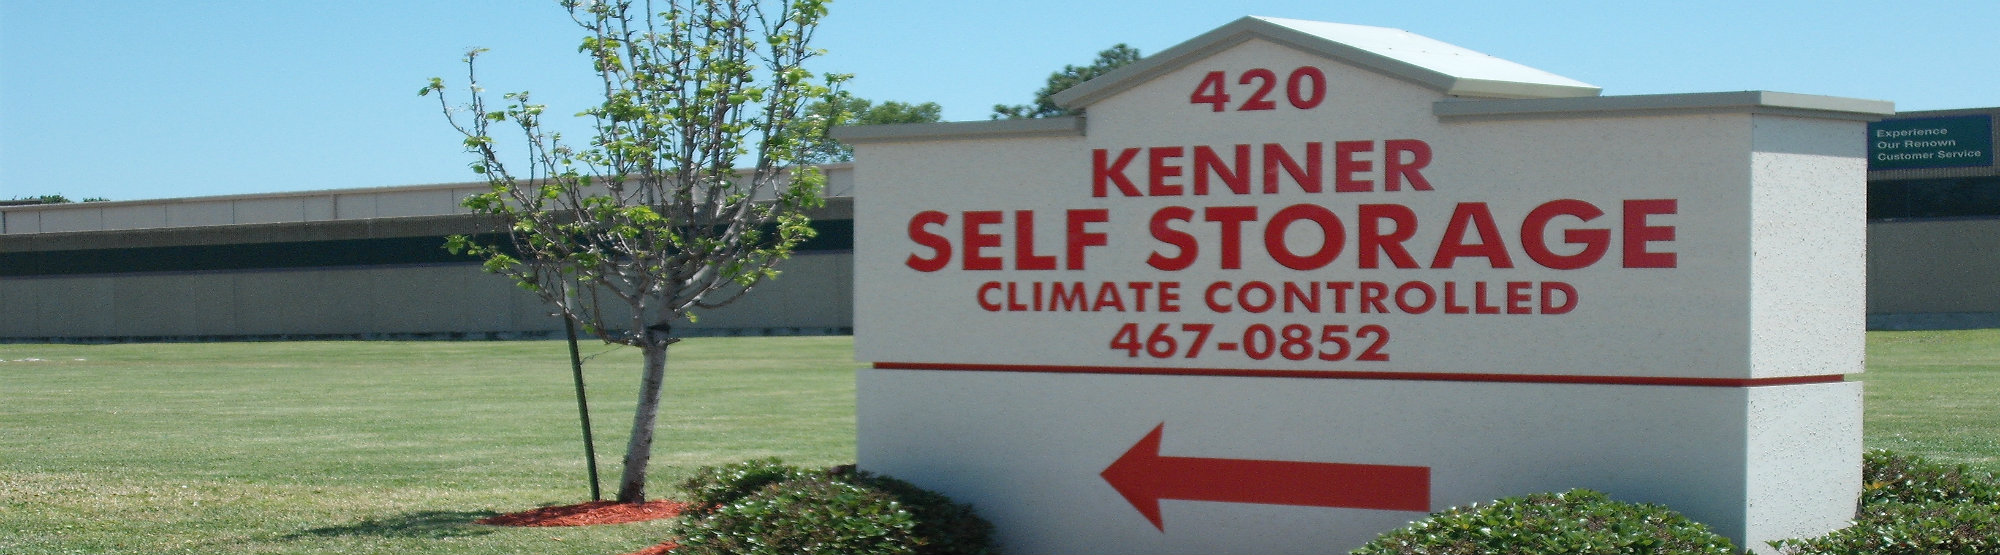 Kenner Self Storage in Kenner, LA